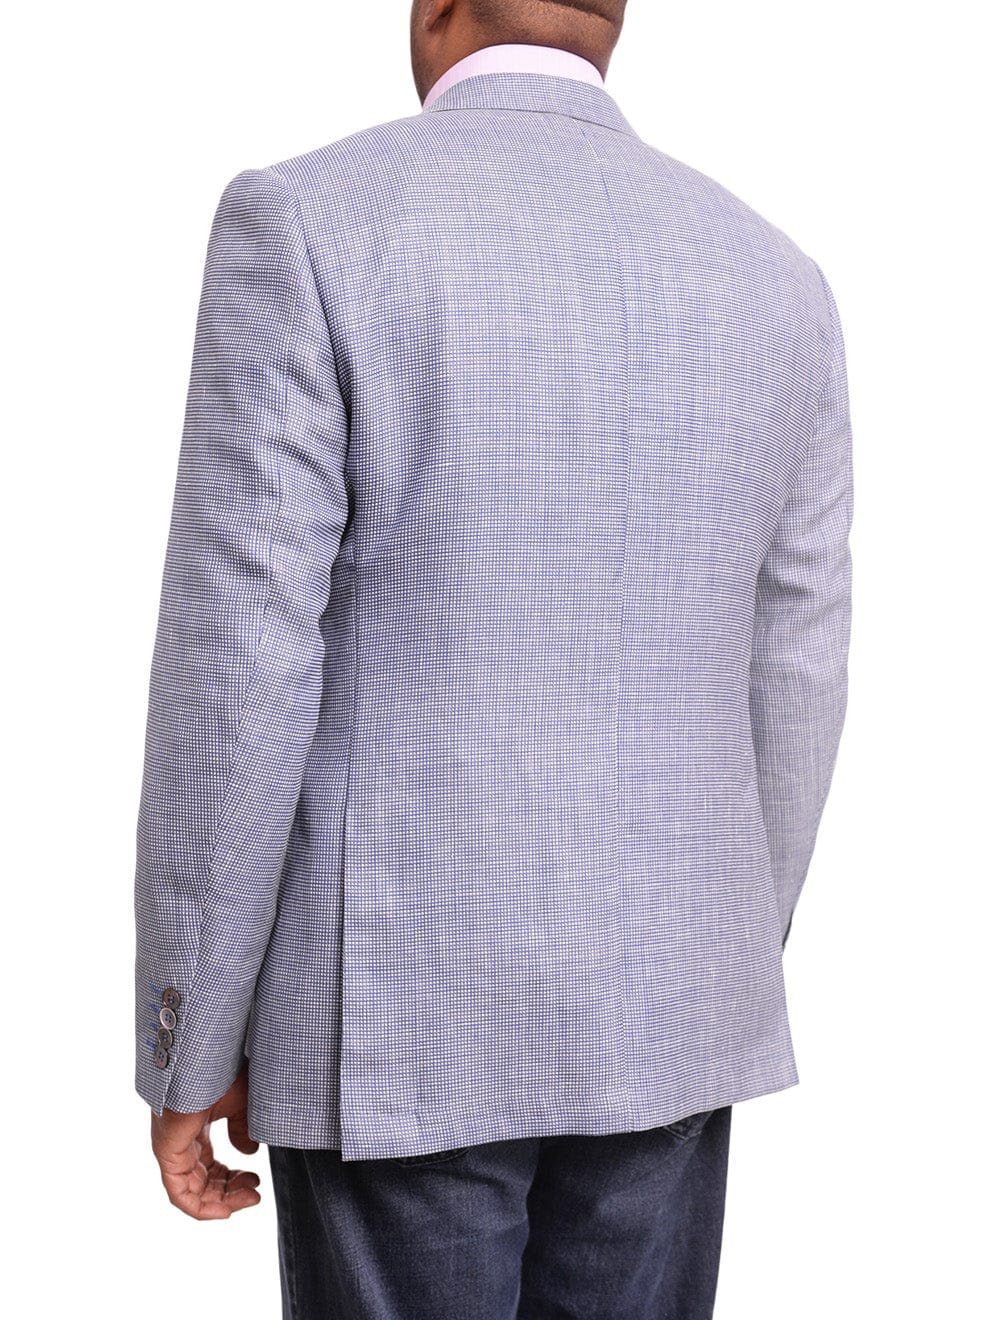 Napoli BLAZERS Napoli Slim Fit Blue Textured Two Button Half Canvassed Linen Blazer Sportcoat